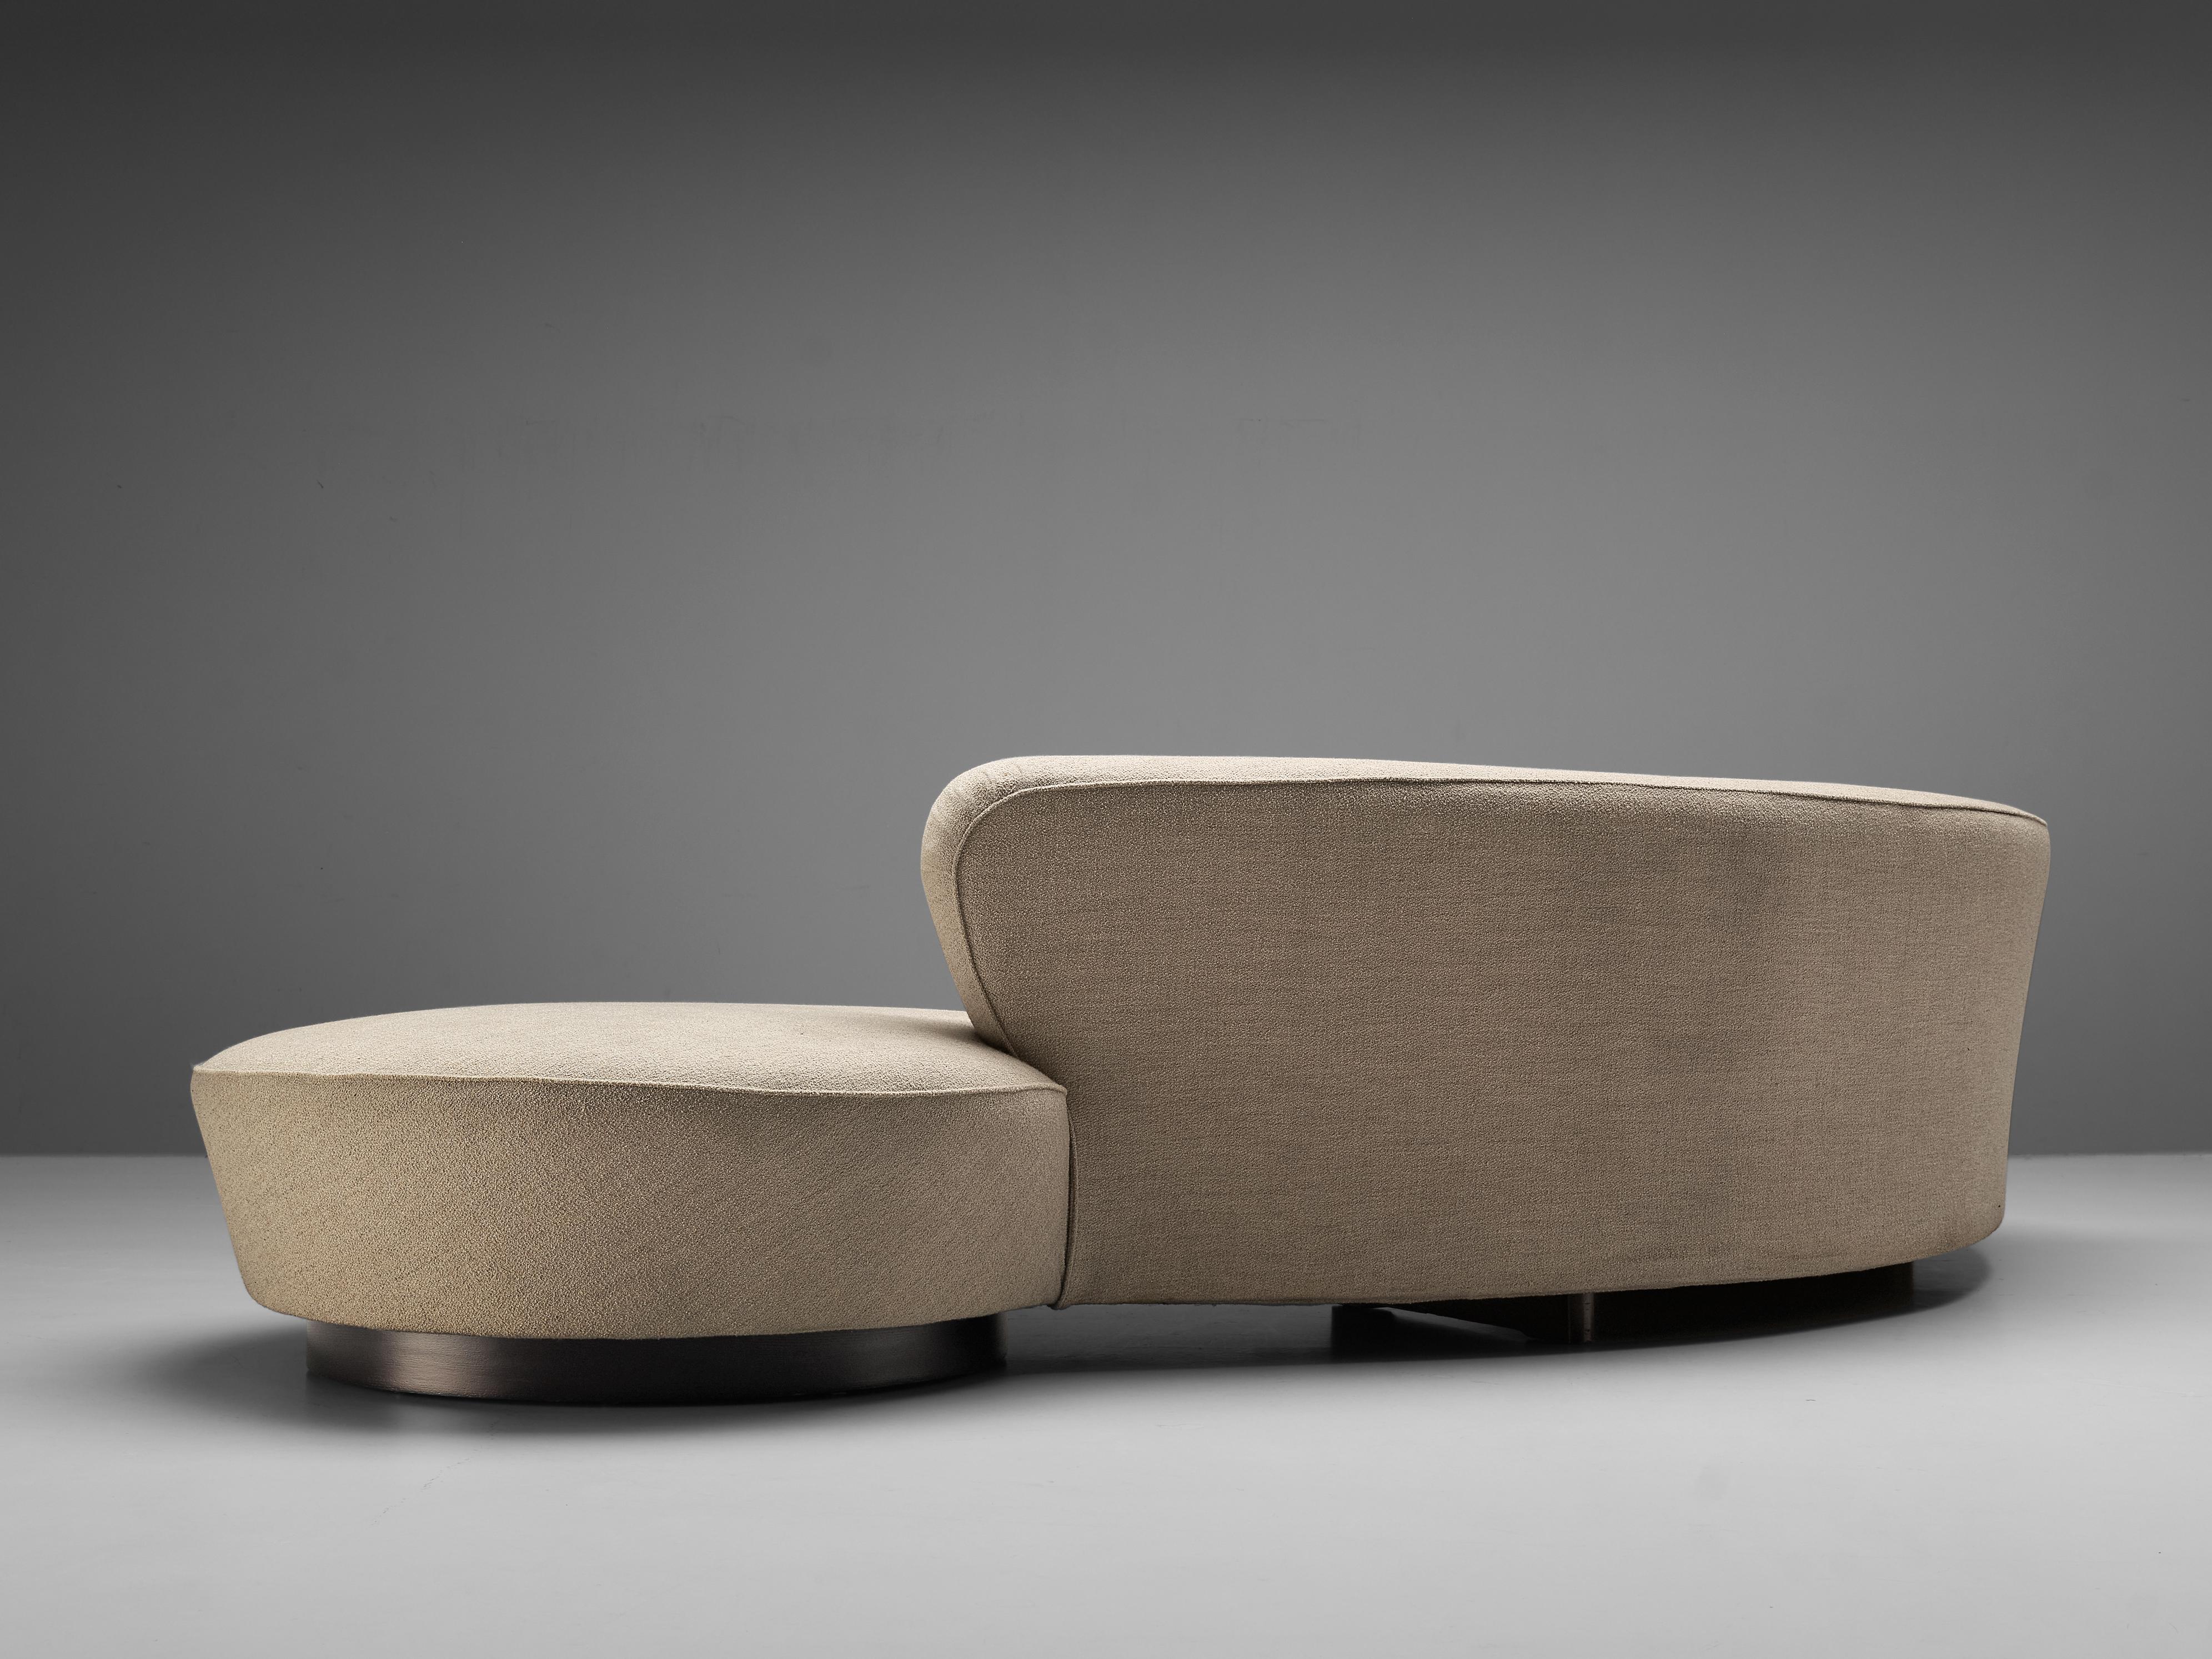 Fabric Iconic Vladimir Kagan 'Serpentine' Sofa in Off-White Upholstery